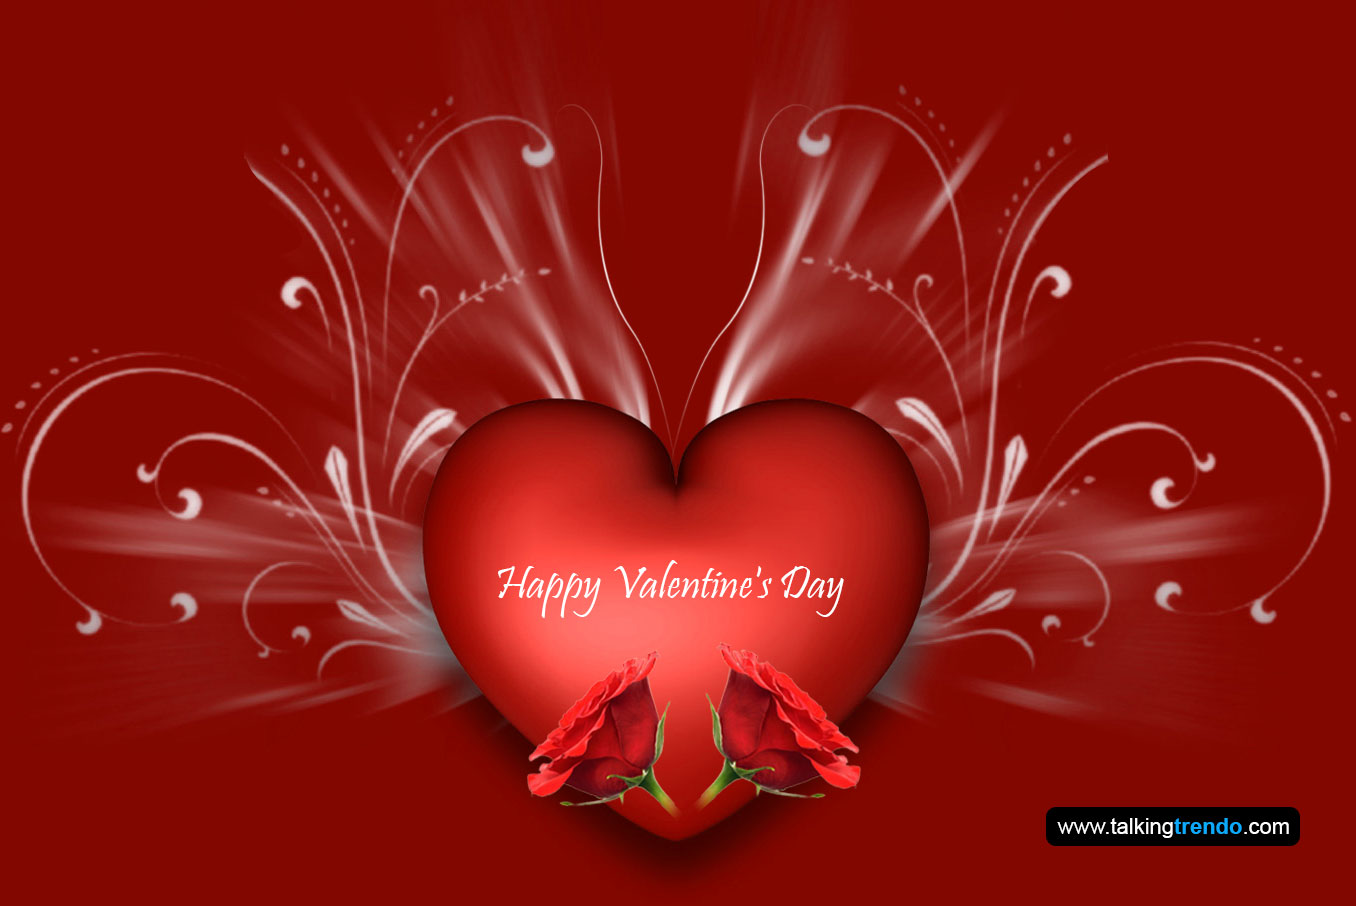 14 feb valentine day wallpaper,heart,red,love,valentine's day,text